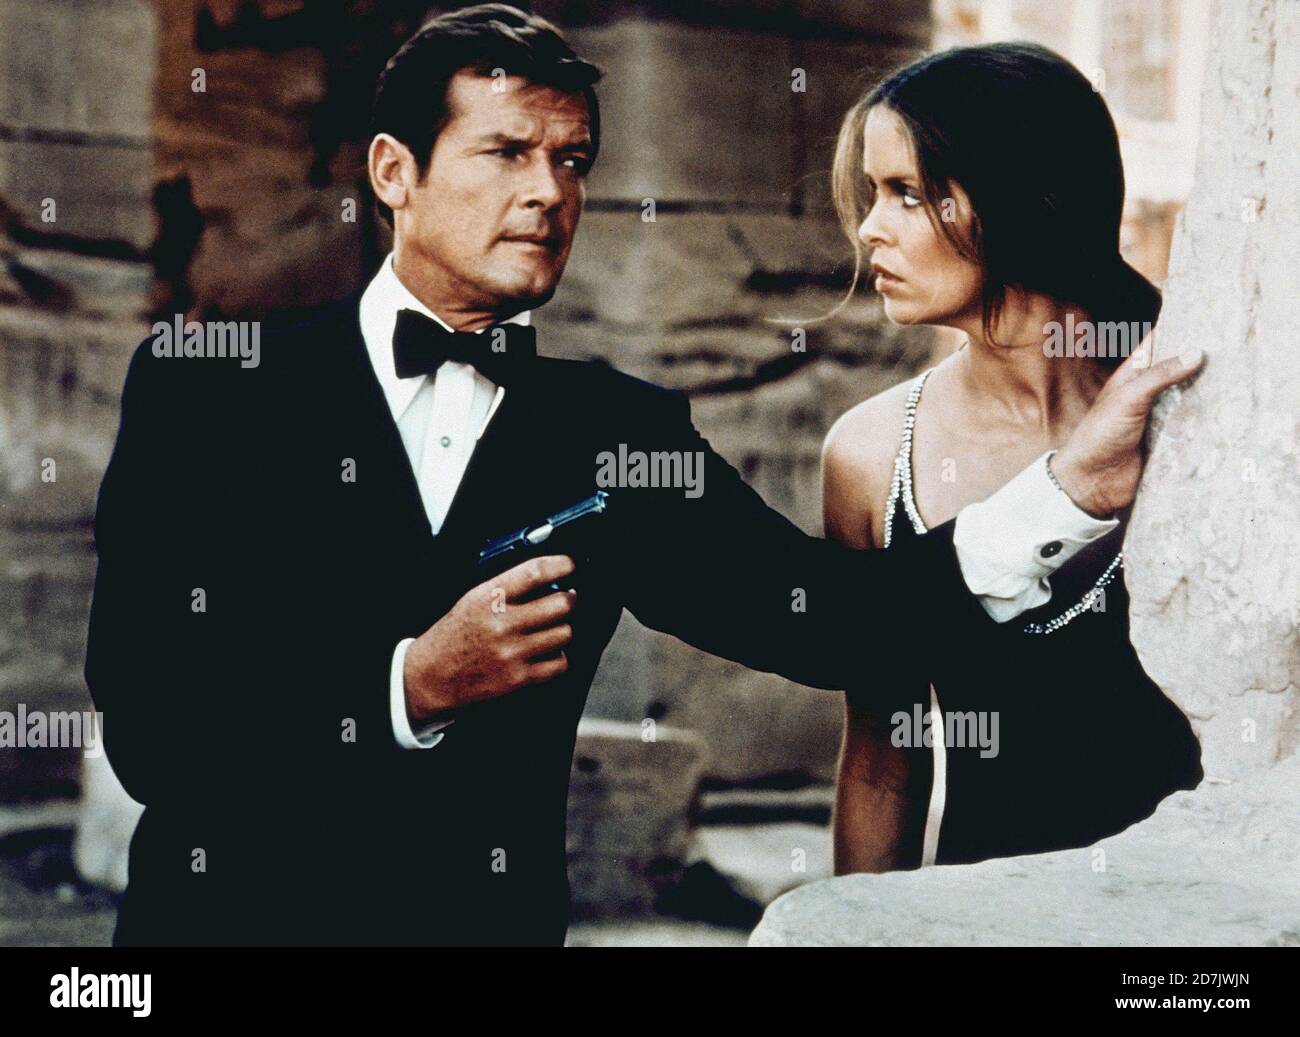 James Bond Film Retrospective / Studio Publicity Still: 